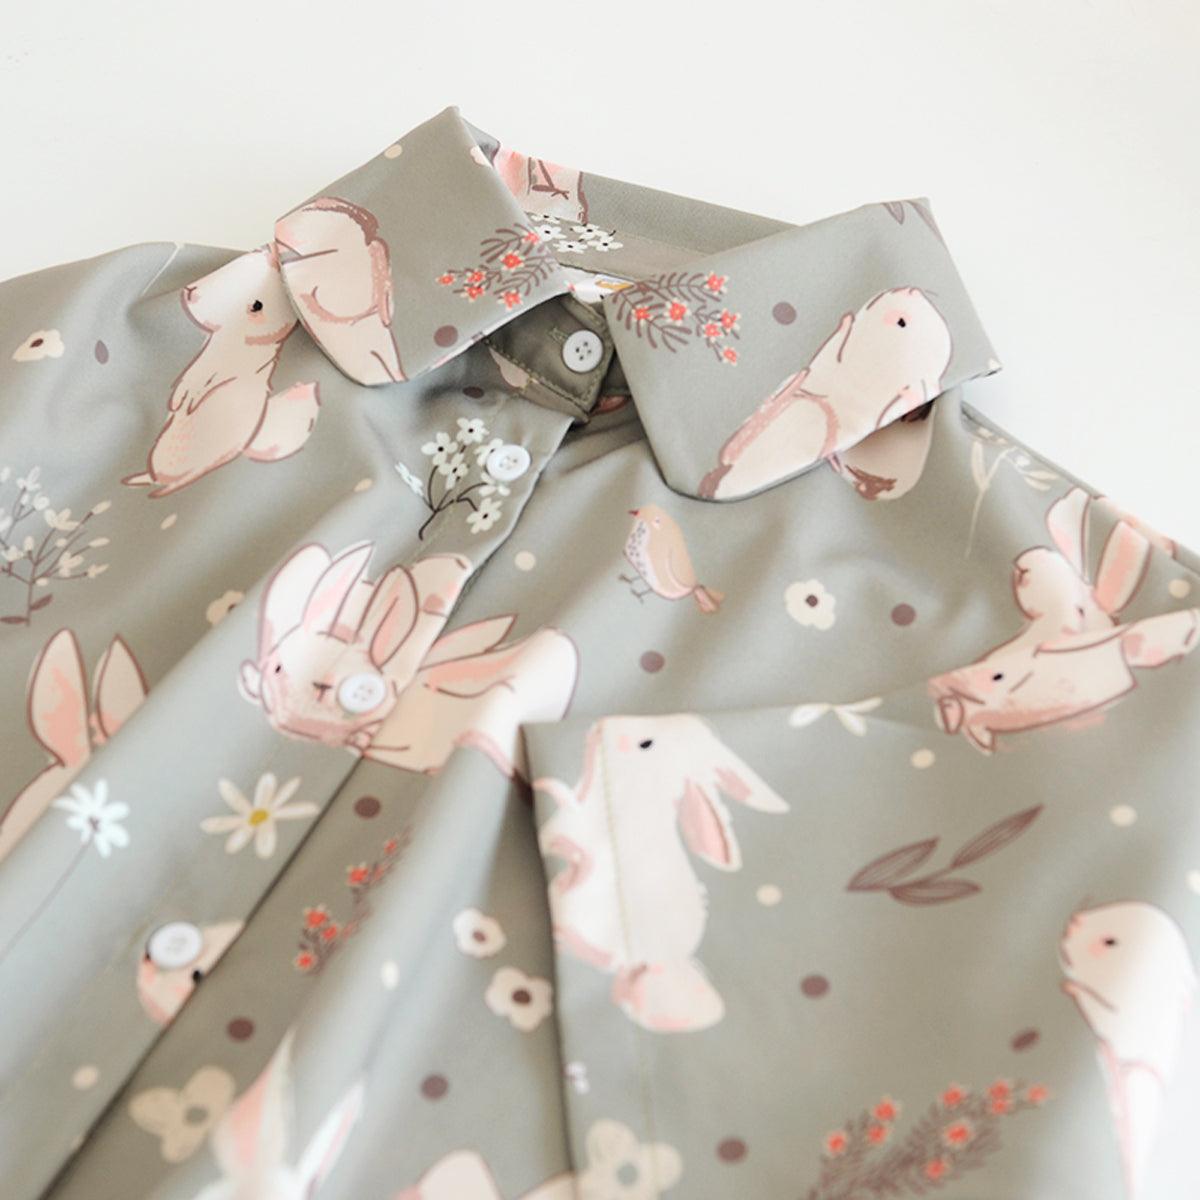 Cute Rabbits Artsy School Girl Shirt - Aesthetic Clothes Shop